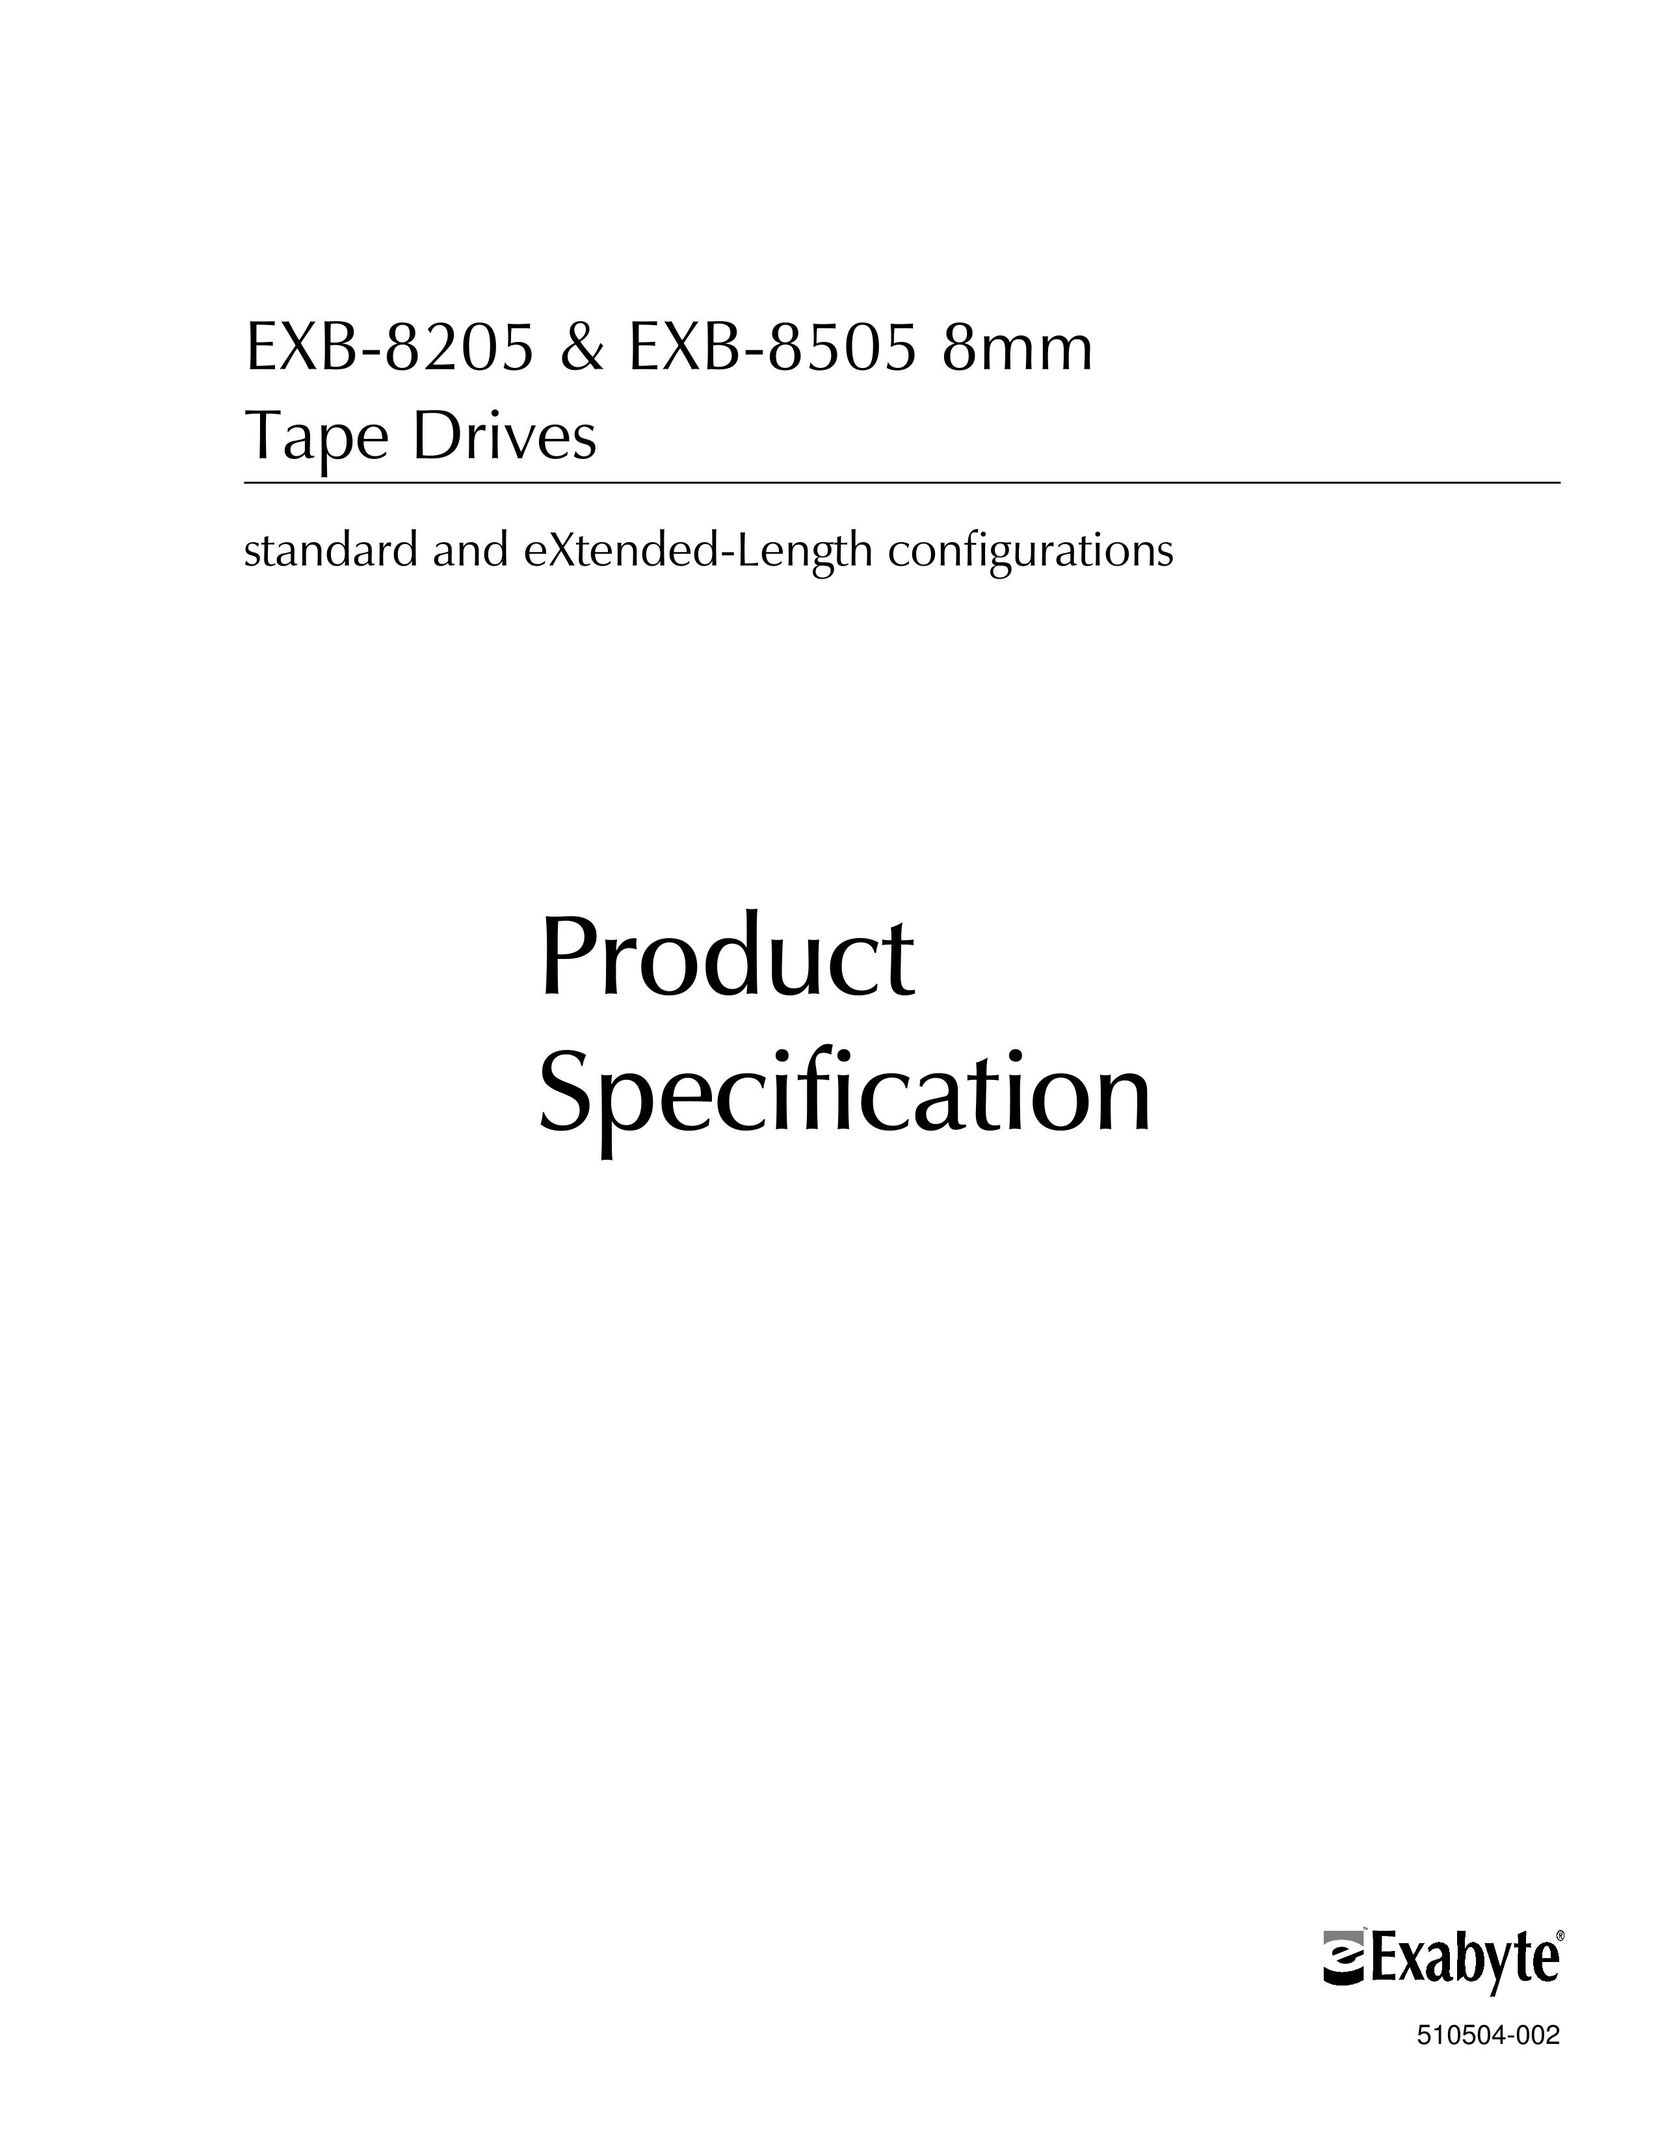 Exabyte EXB-8505 8mm Computer Drive User Manual